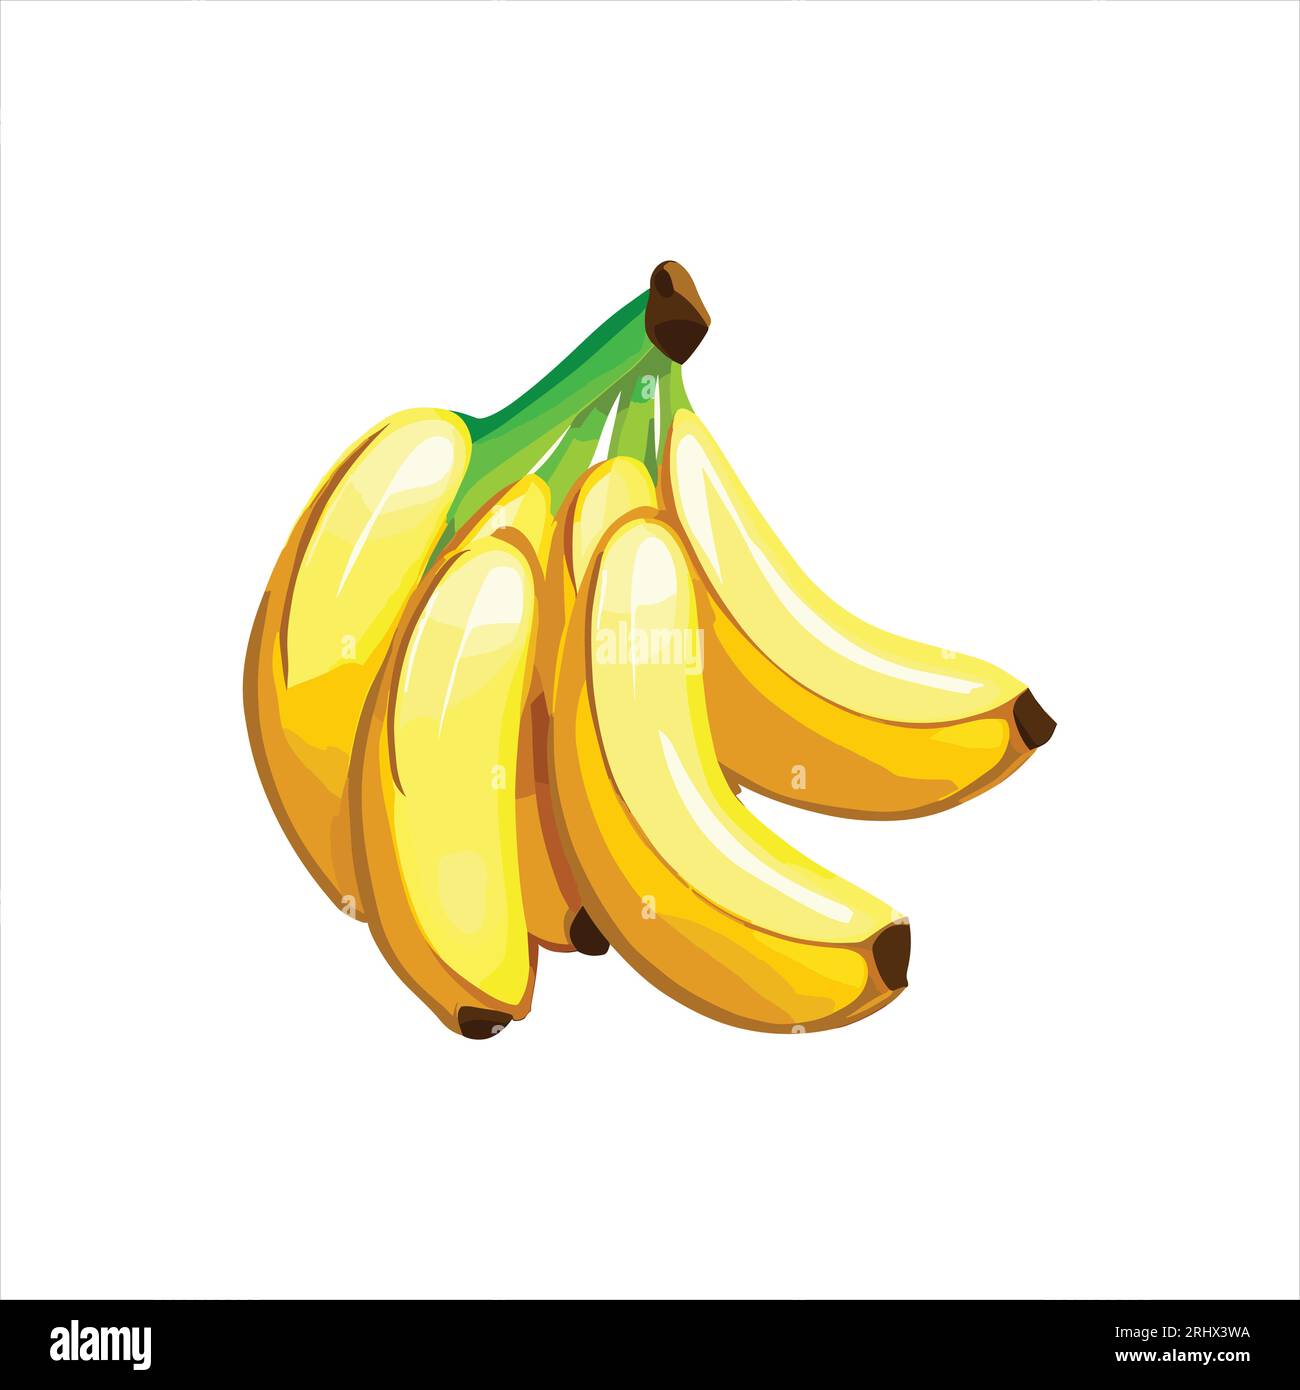 https://c8.alamy.com/comp/2RHX3WA/clipart-vector-illustration-of-bananas-2RHX3WA.jpg